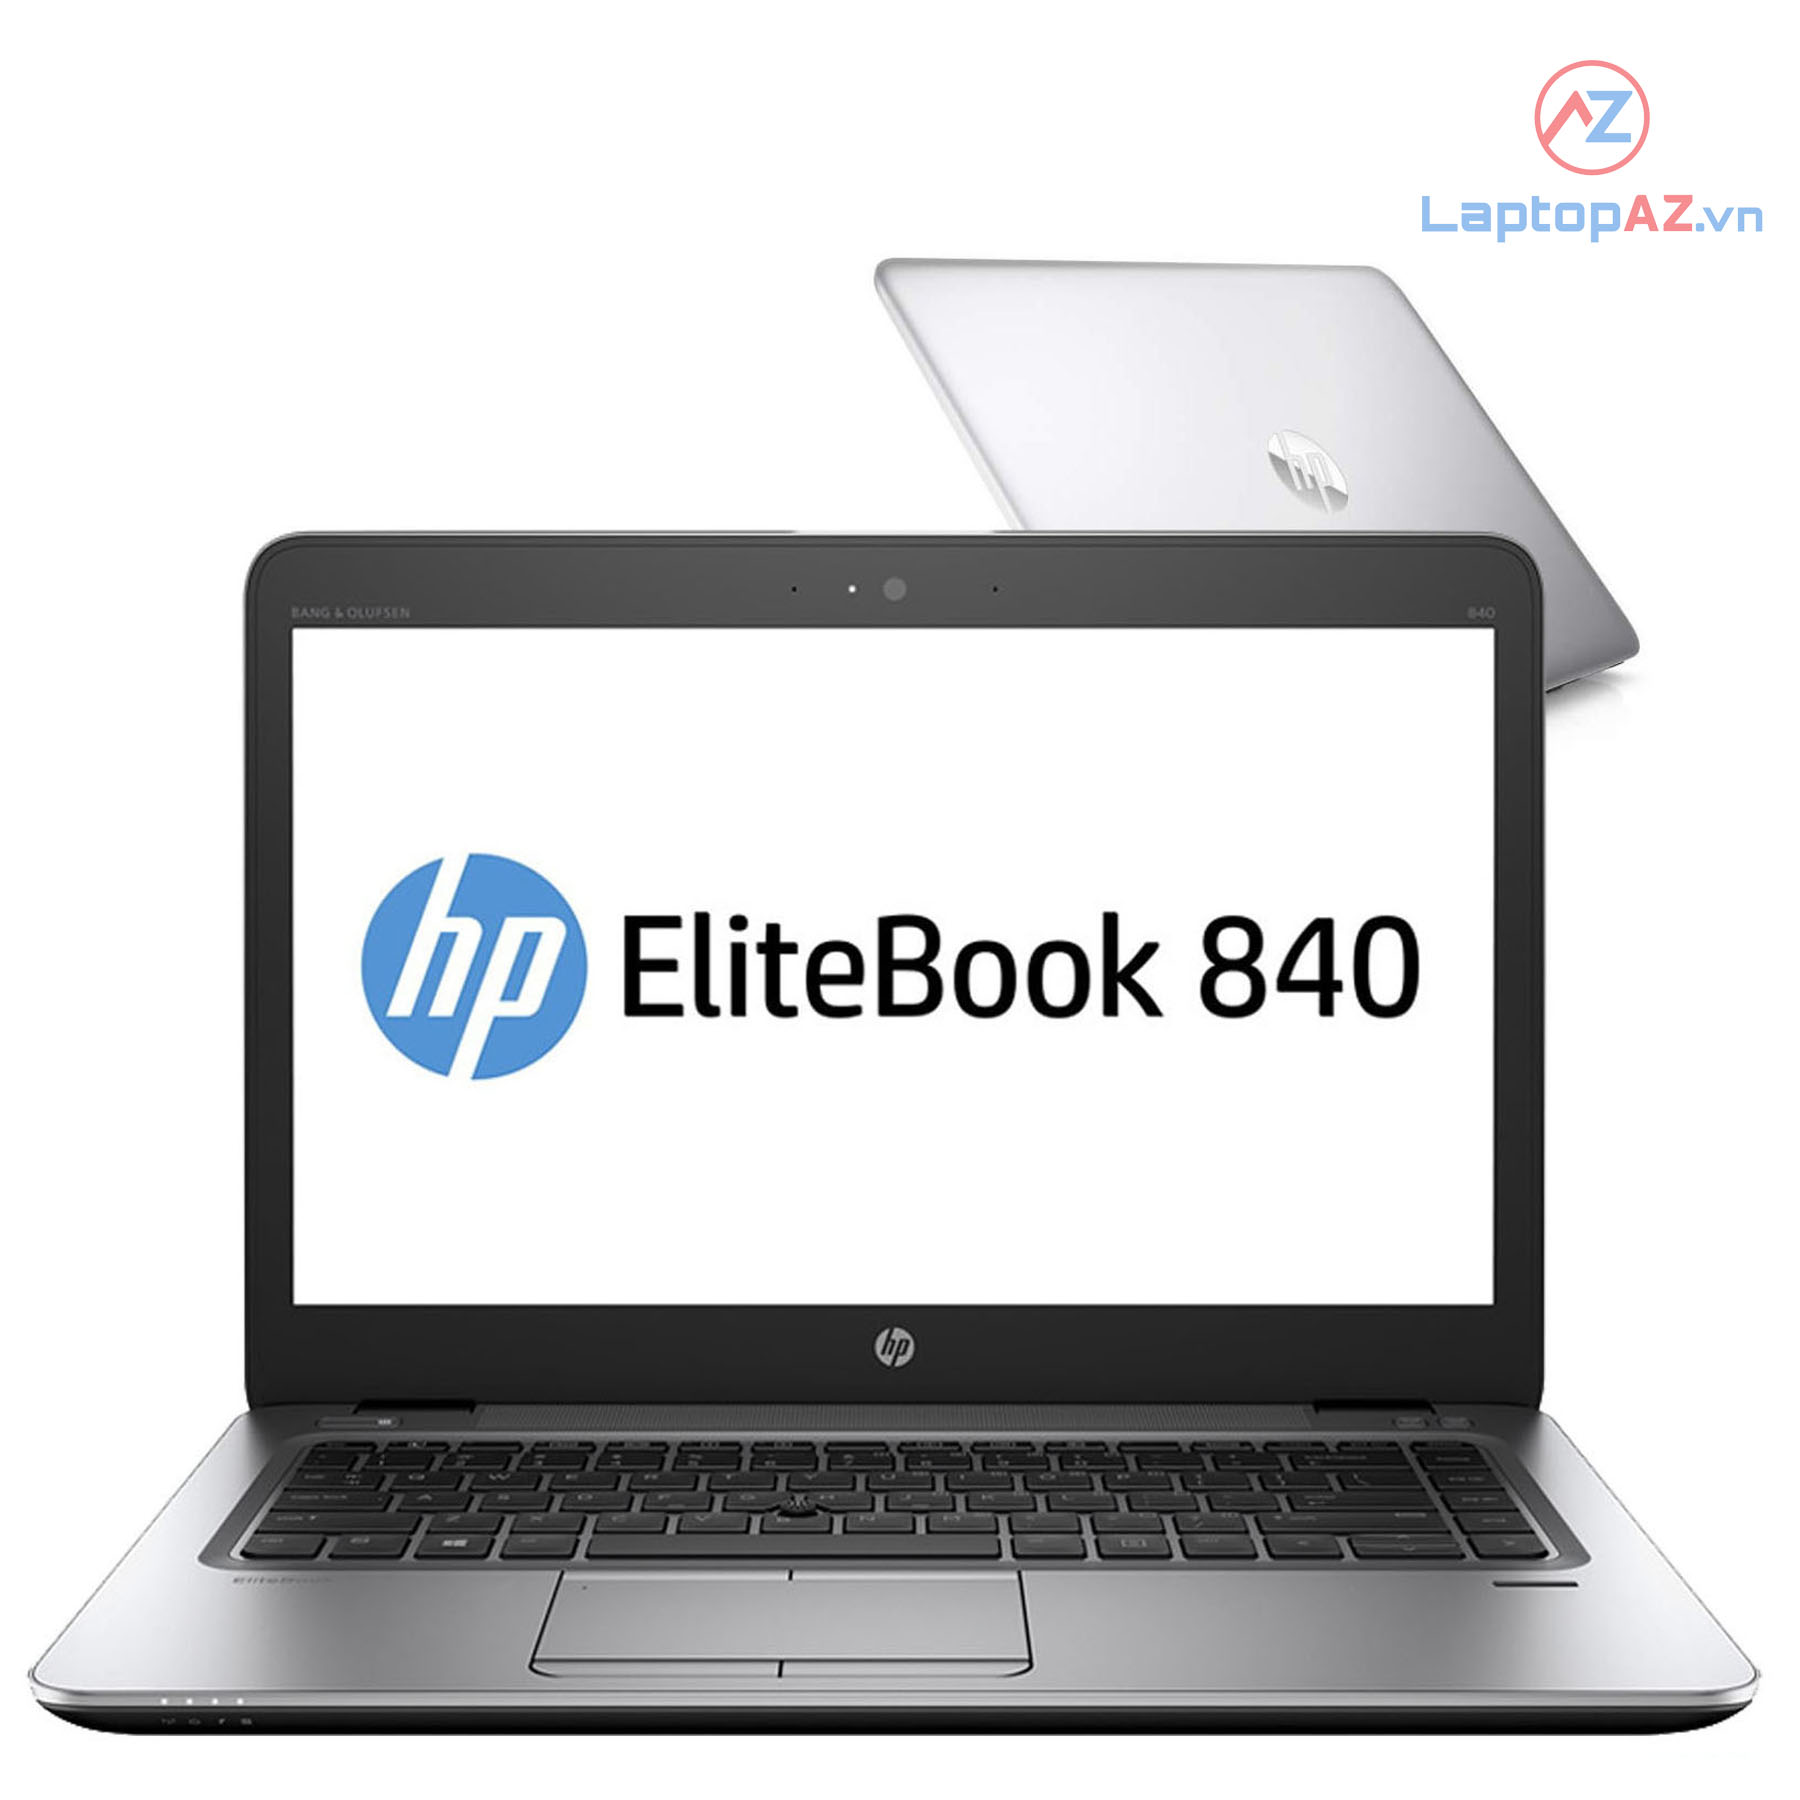 HP EliteBook 840 G3 (Core i5-6200U, 8GB, 256GB, VGA Intel HD Graphics 520, 14' FHD)